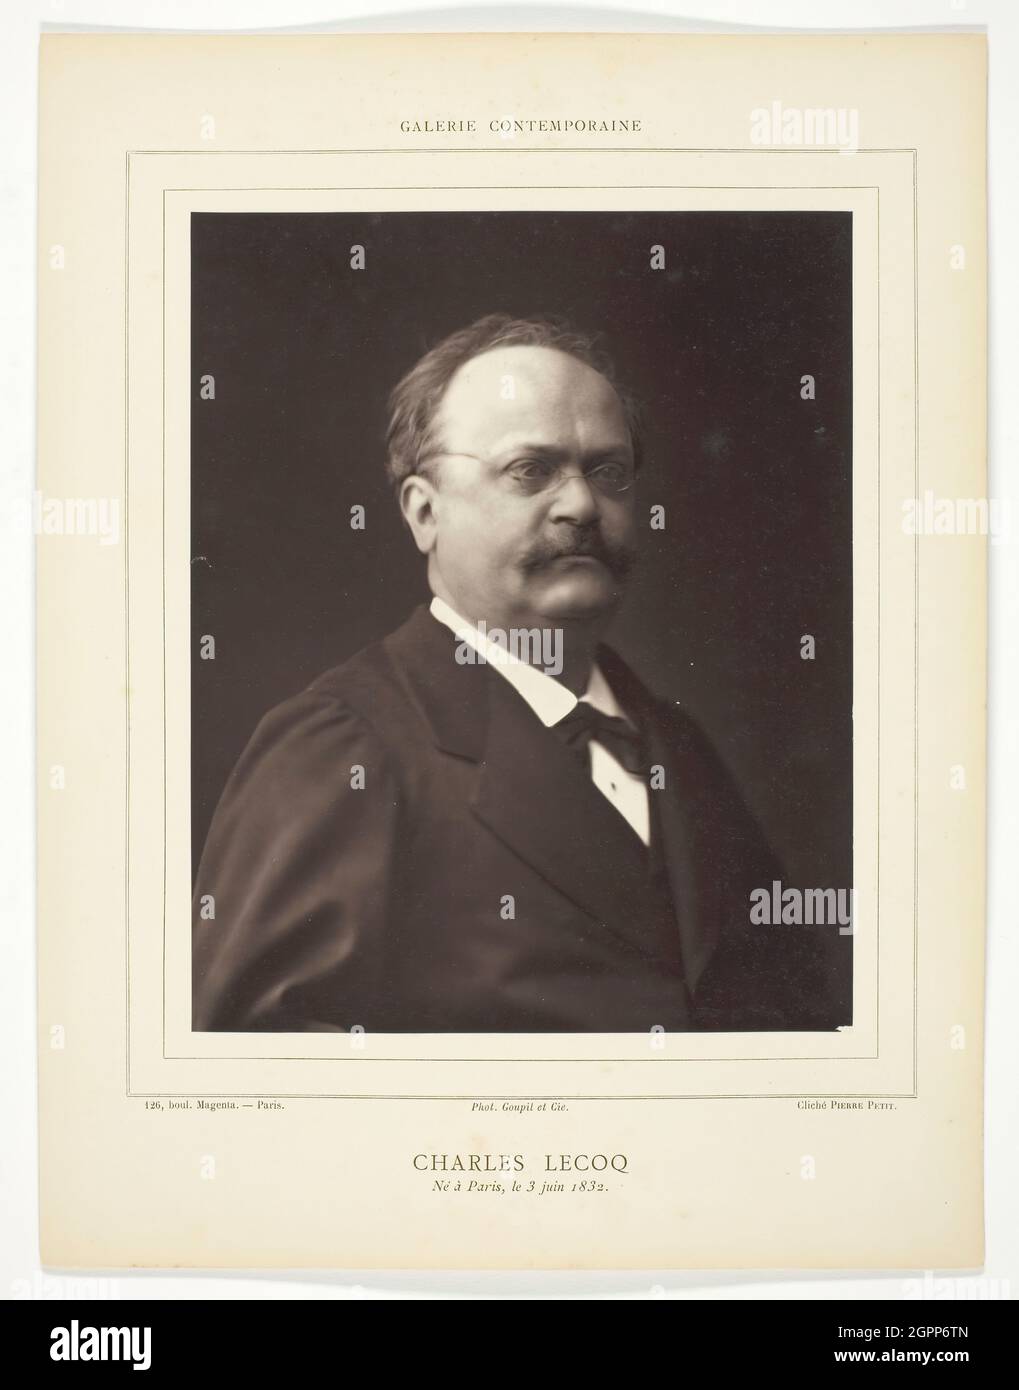 Charles Lecoq, compositore francese, c.. 1876/84. Woodburytype, dal periodico "Galerie Contemporaine Litt&#xe9;raire, Artistique". Foto Stock